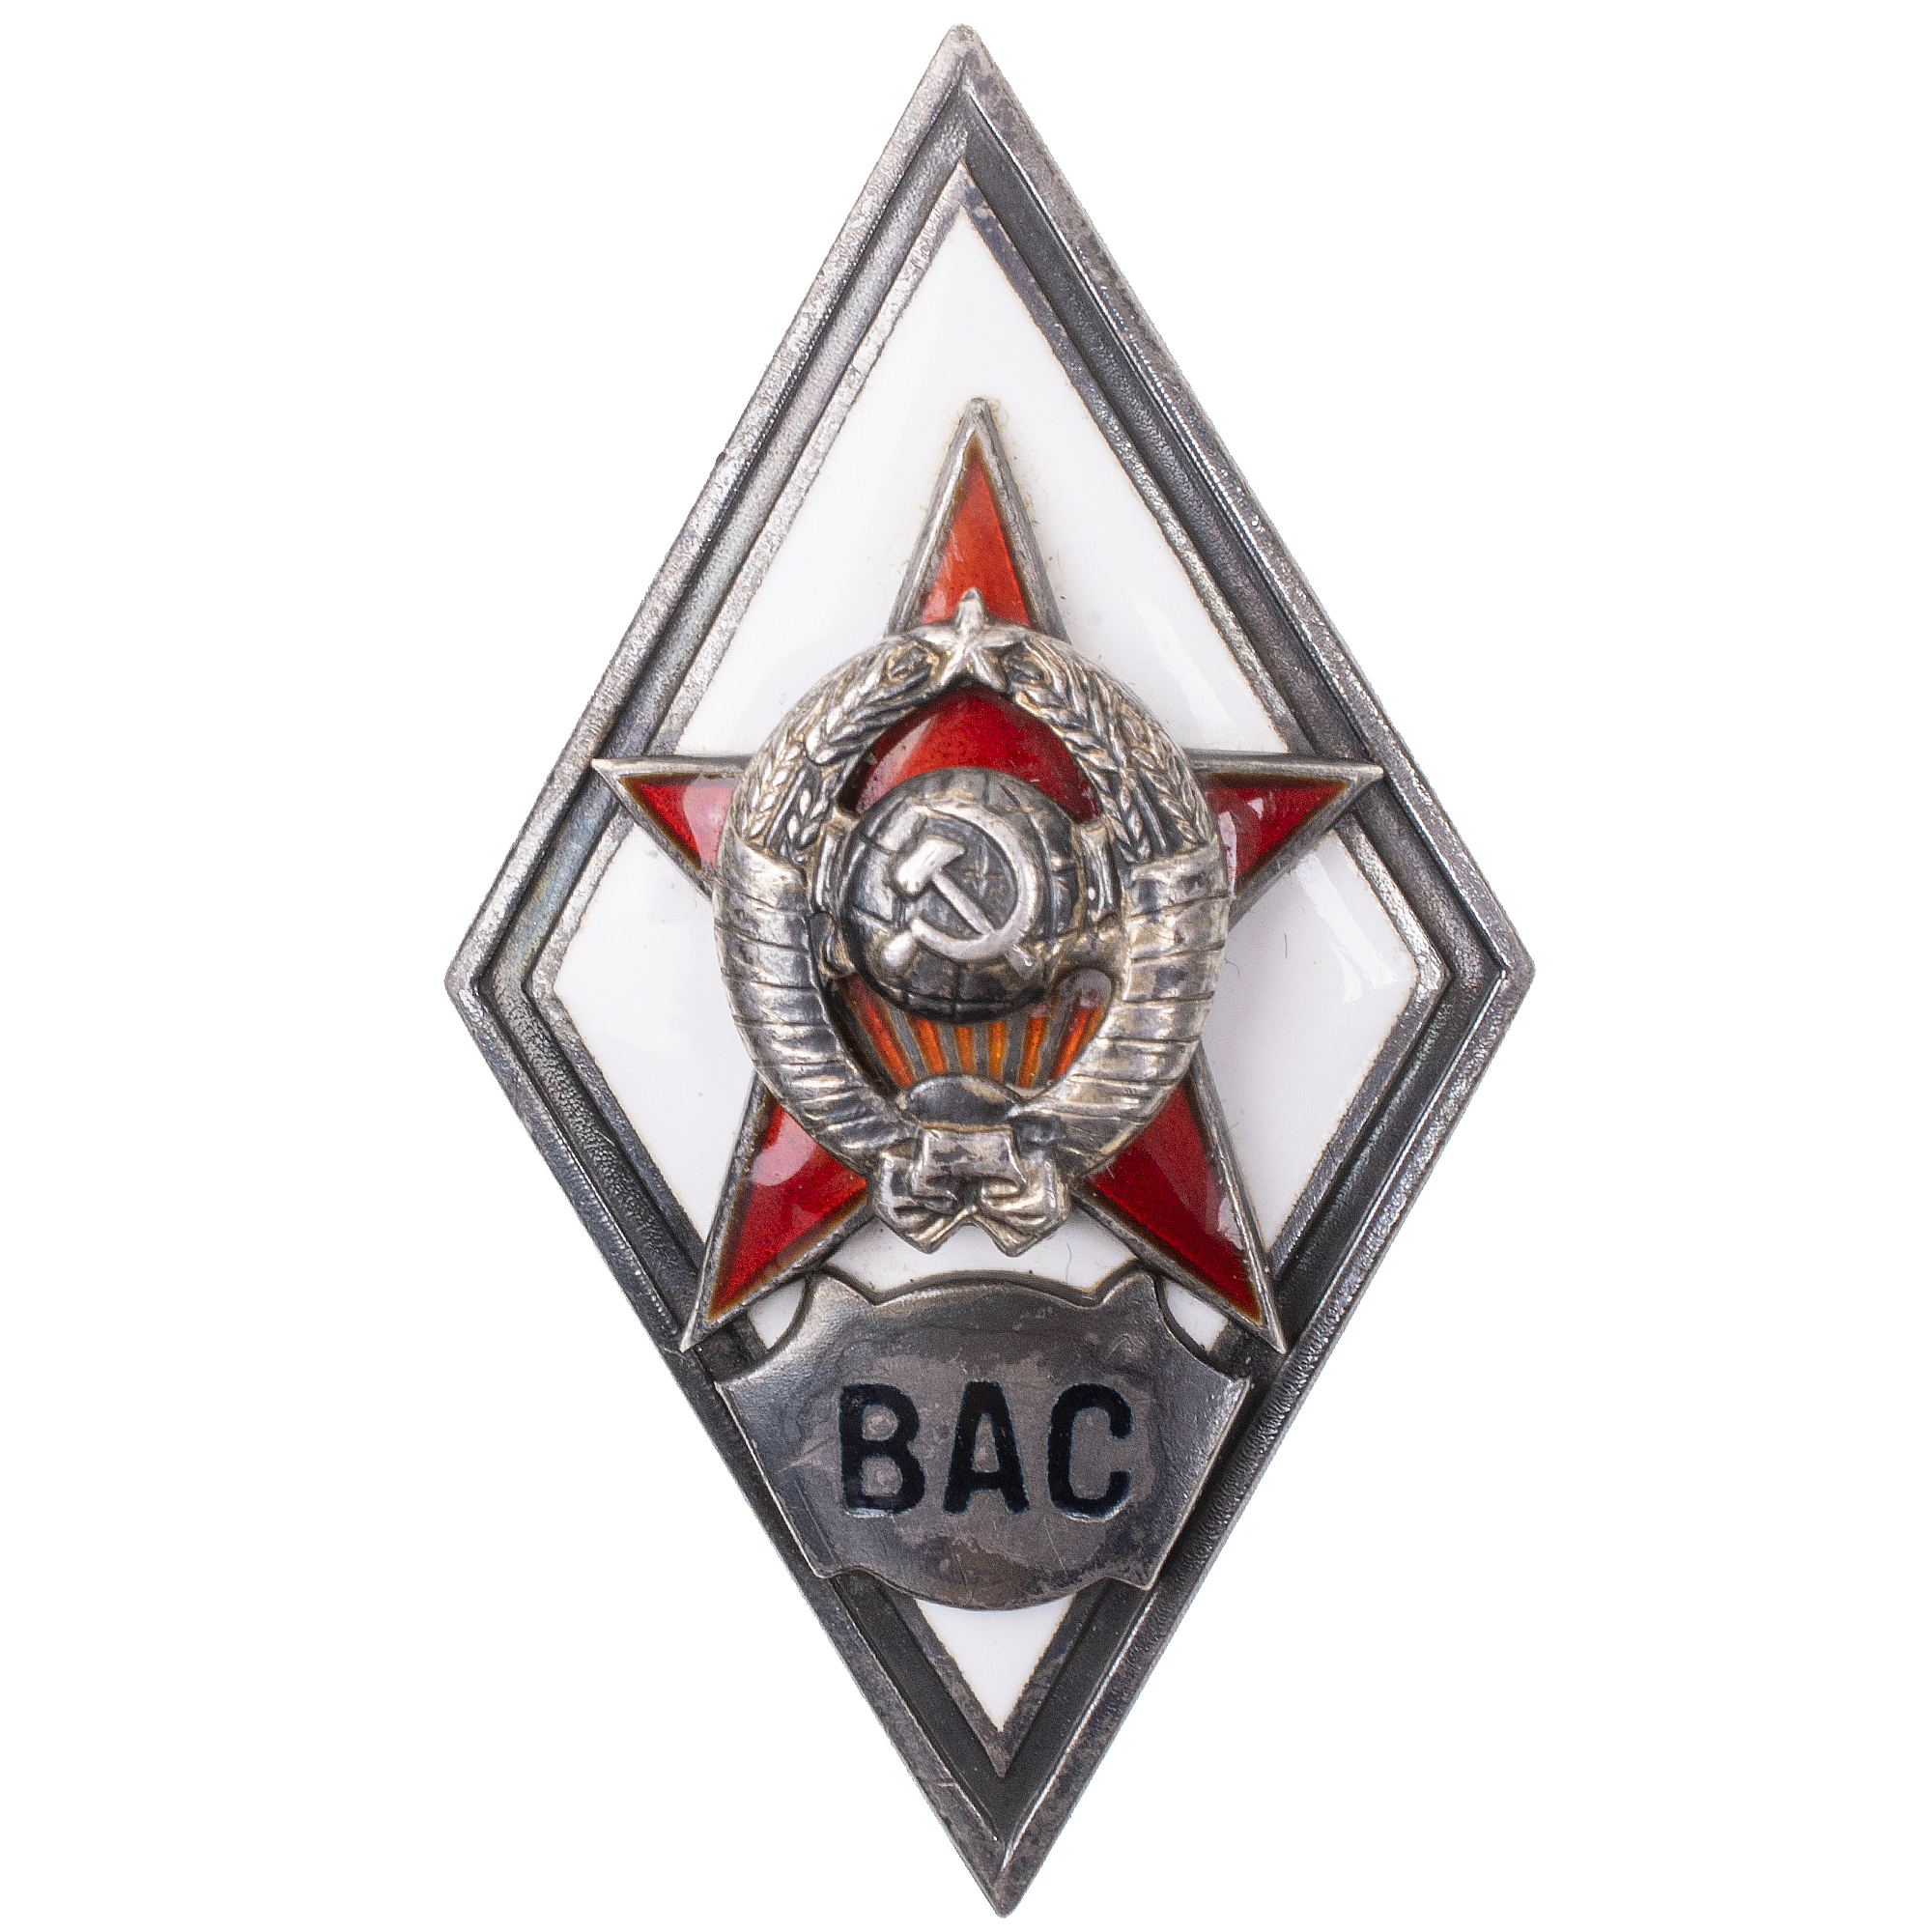 Знак выпускника Военной академии связи (ВАС), I тип, б/н., АРТИКУЛ П19-19